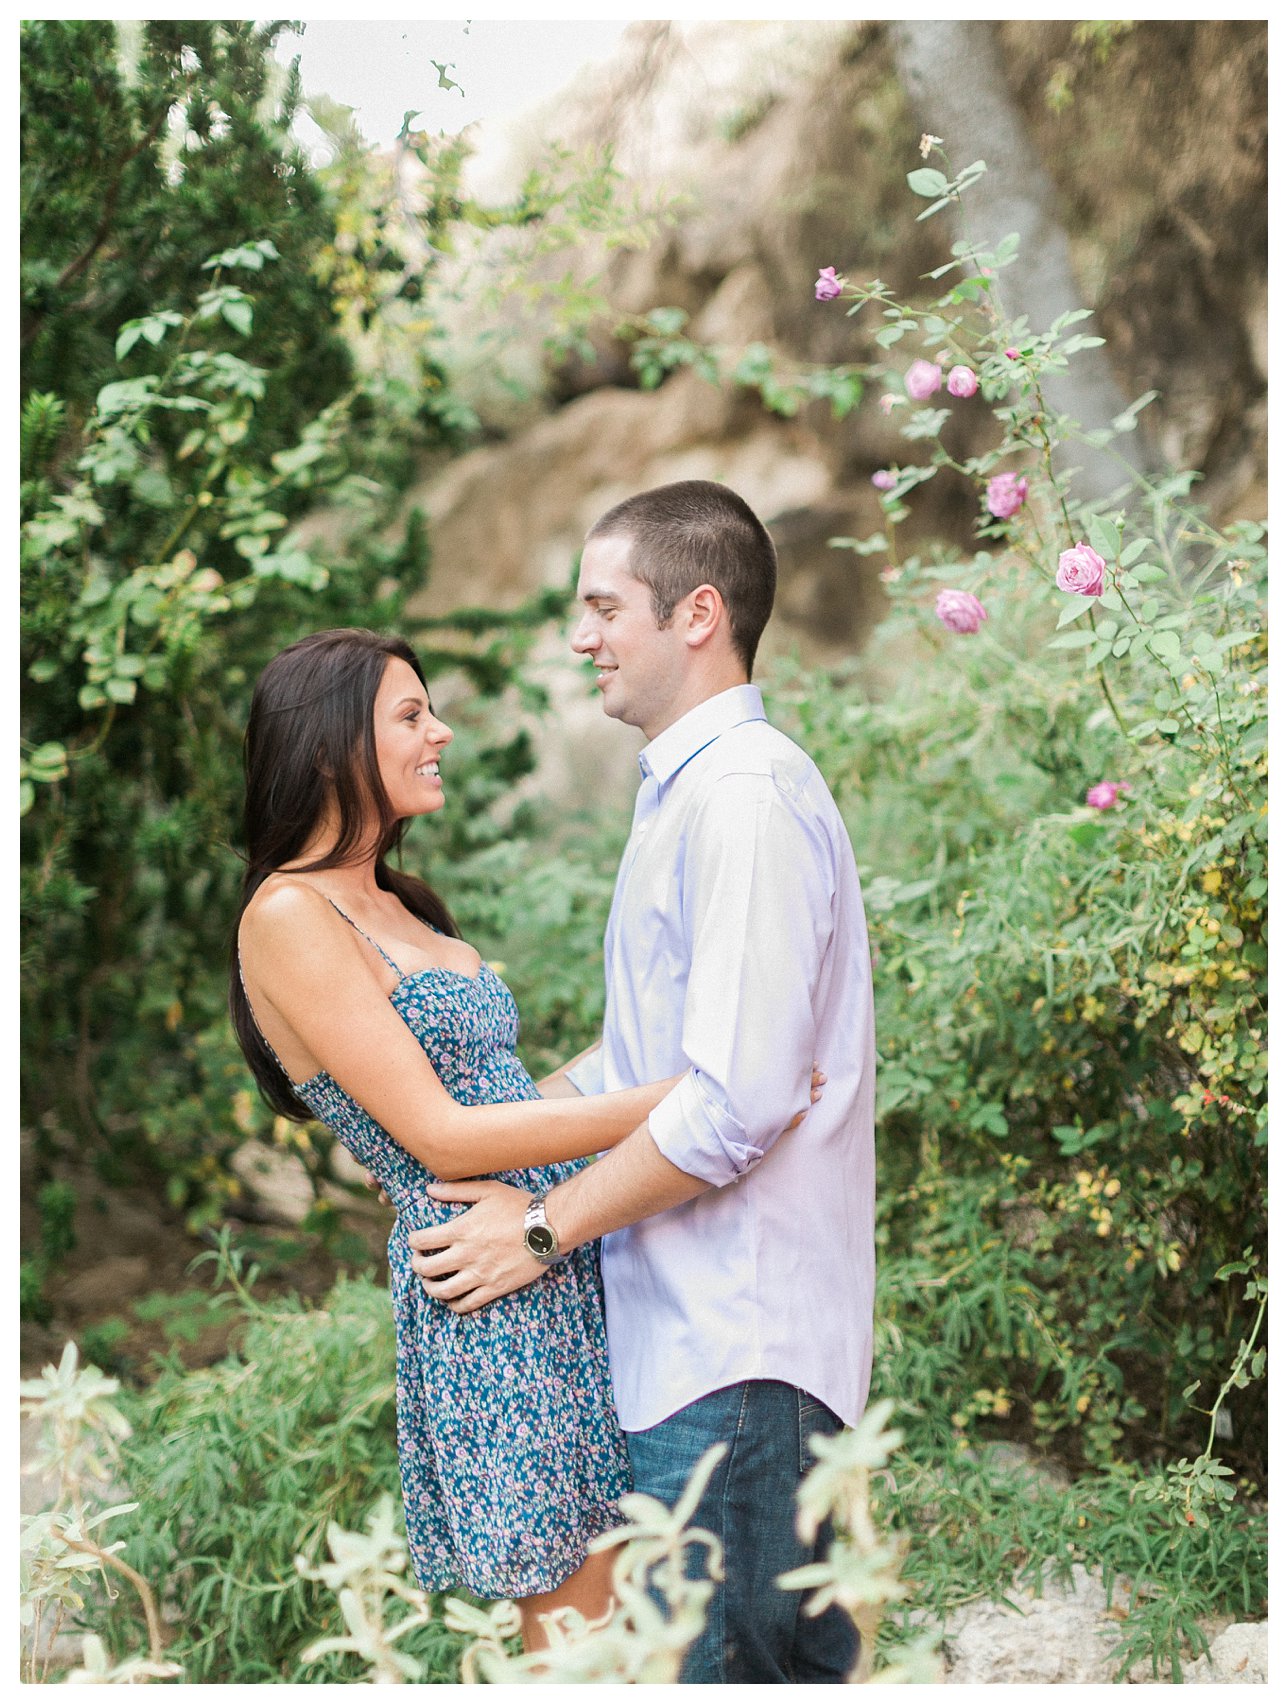 Boyce Thompson Arboretum engagement photos - Scottsdale Wedding Photographer | Rachel Solomon Photography_4708